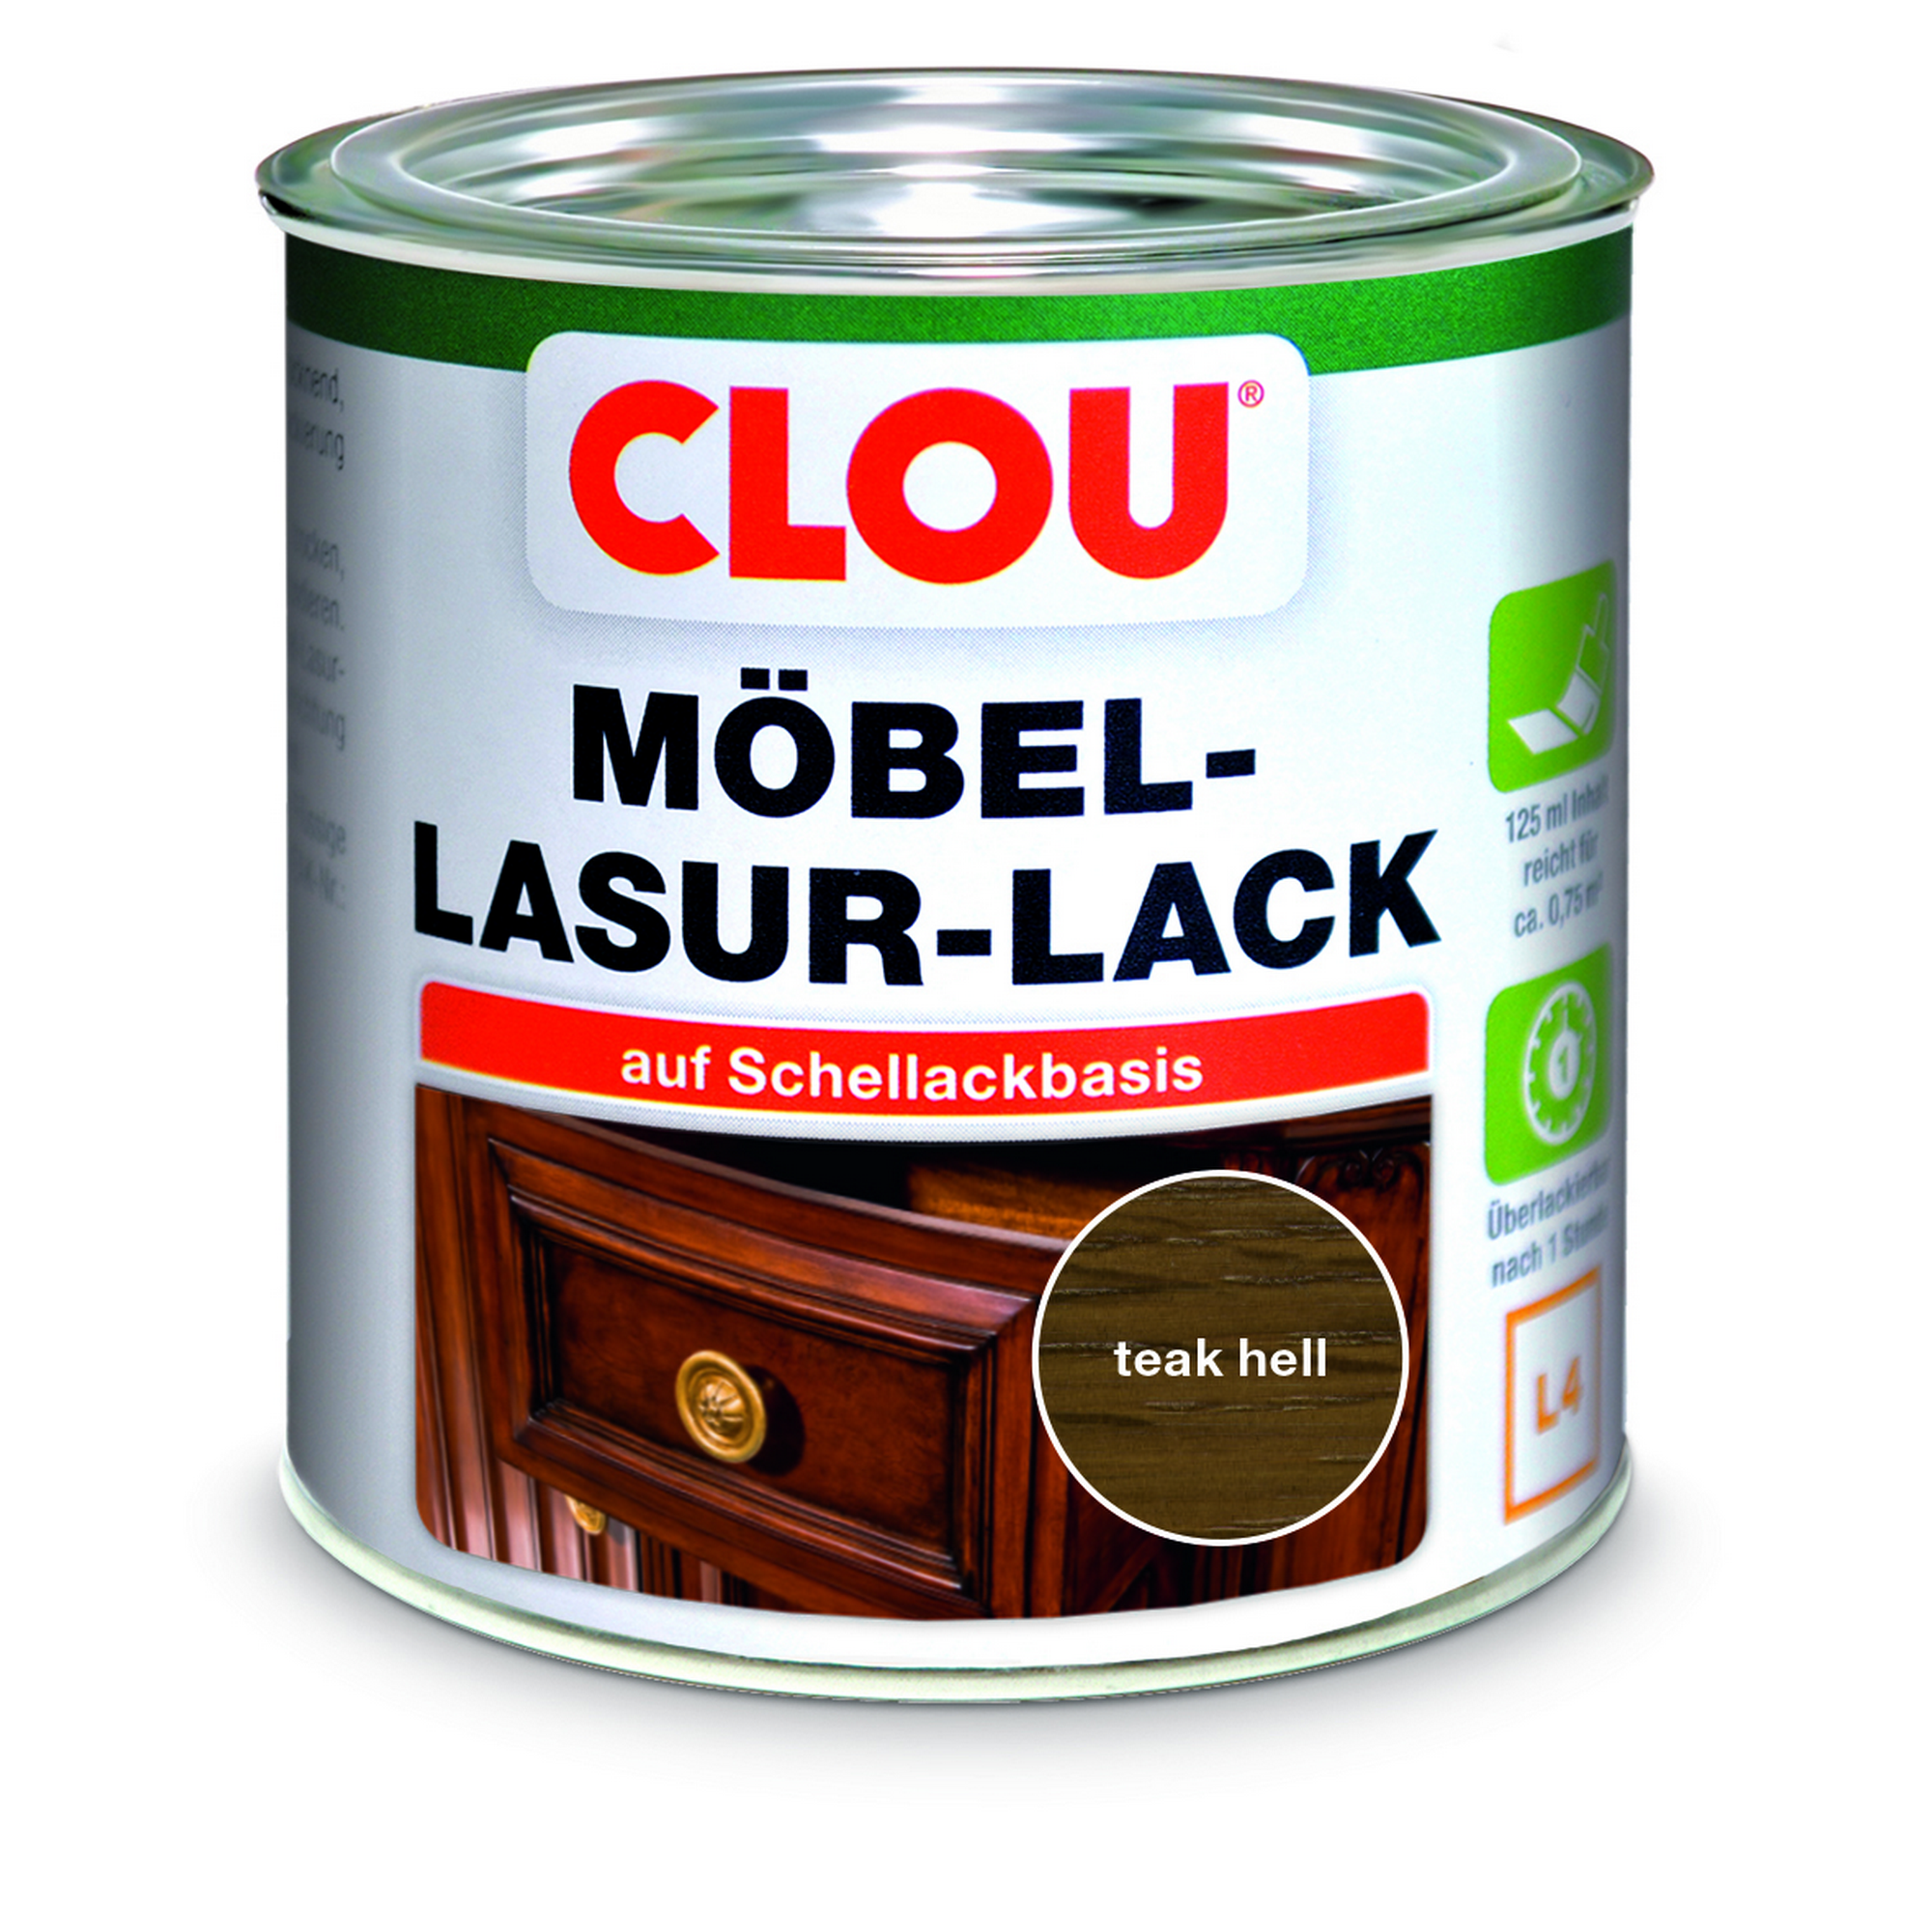 Möbel-Lasurlack teakfarben hell 125 ml + product picture